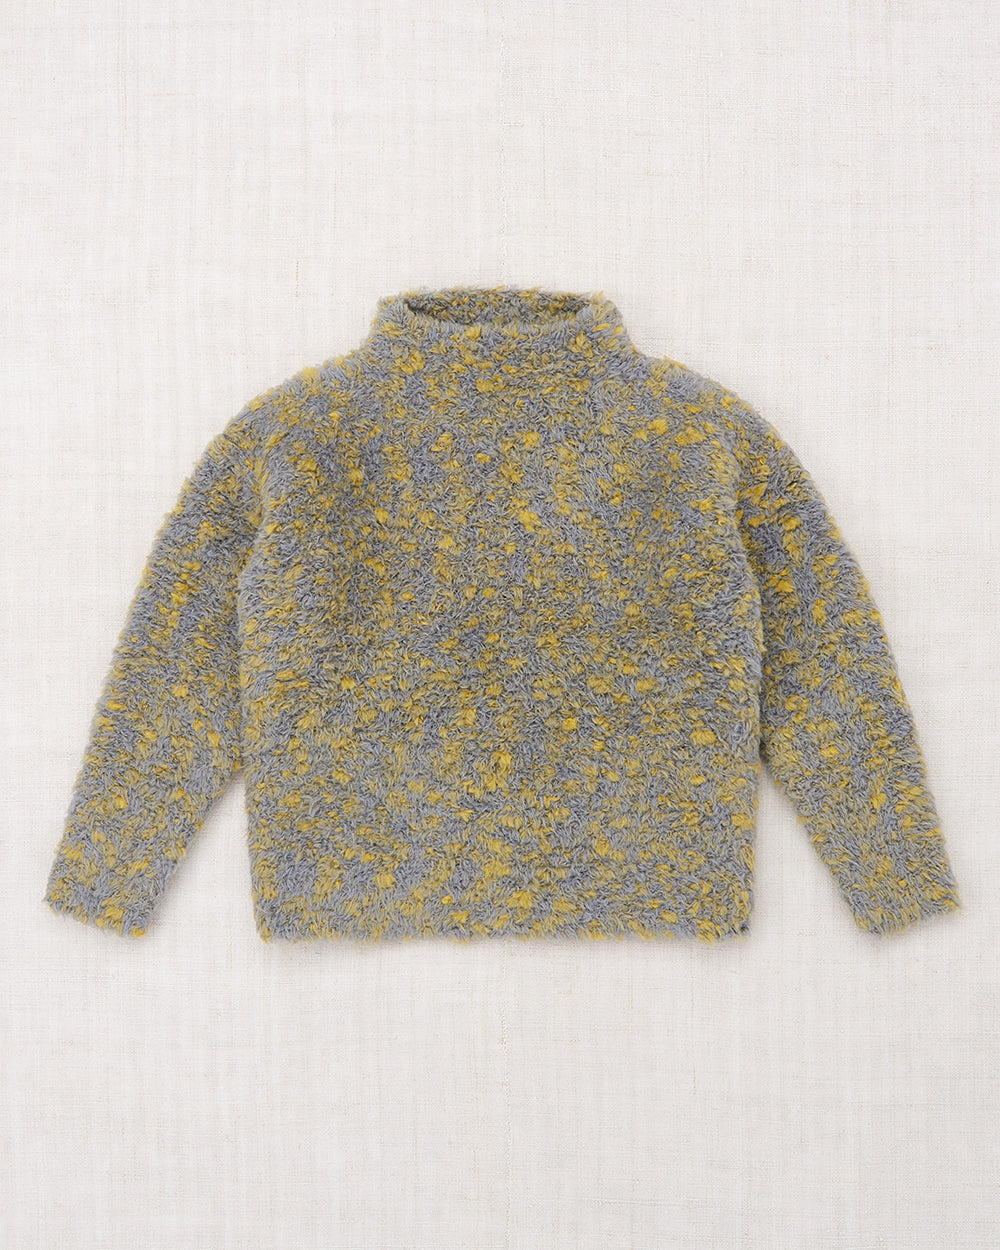 Teddy Sweater